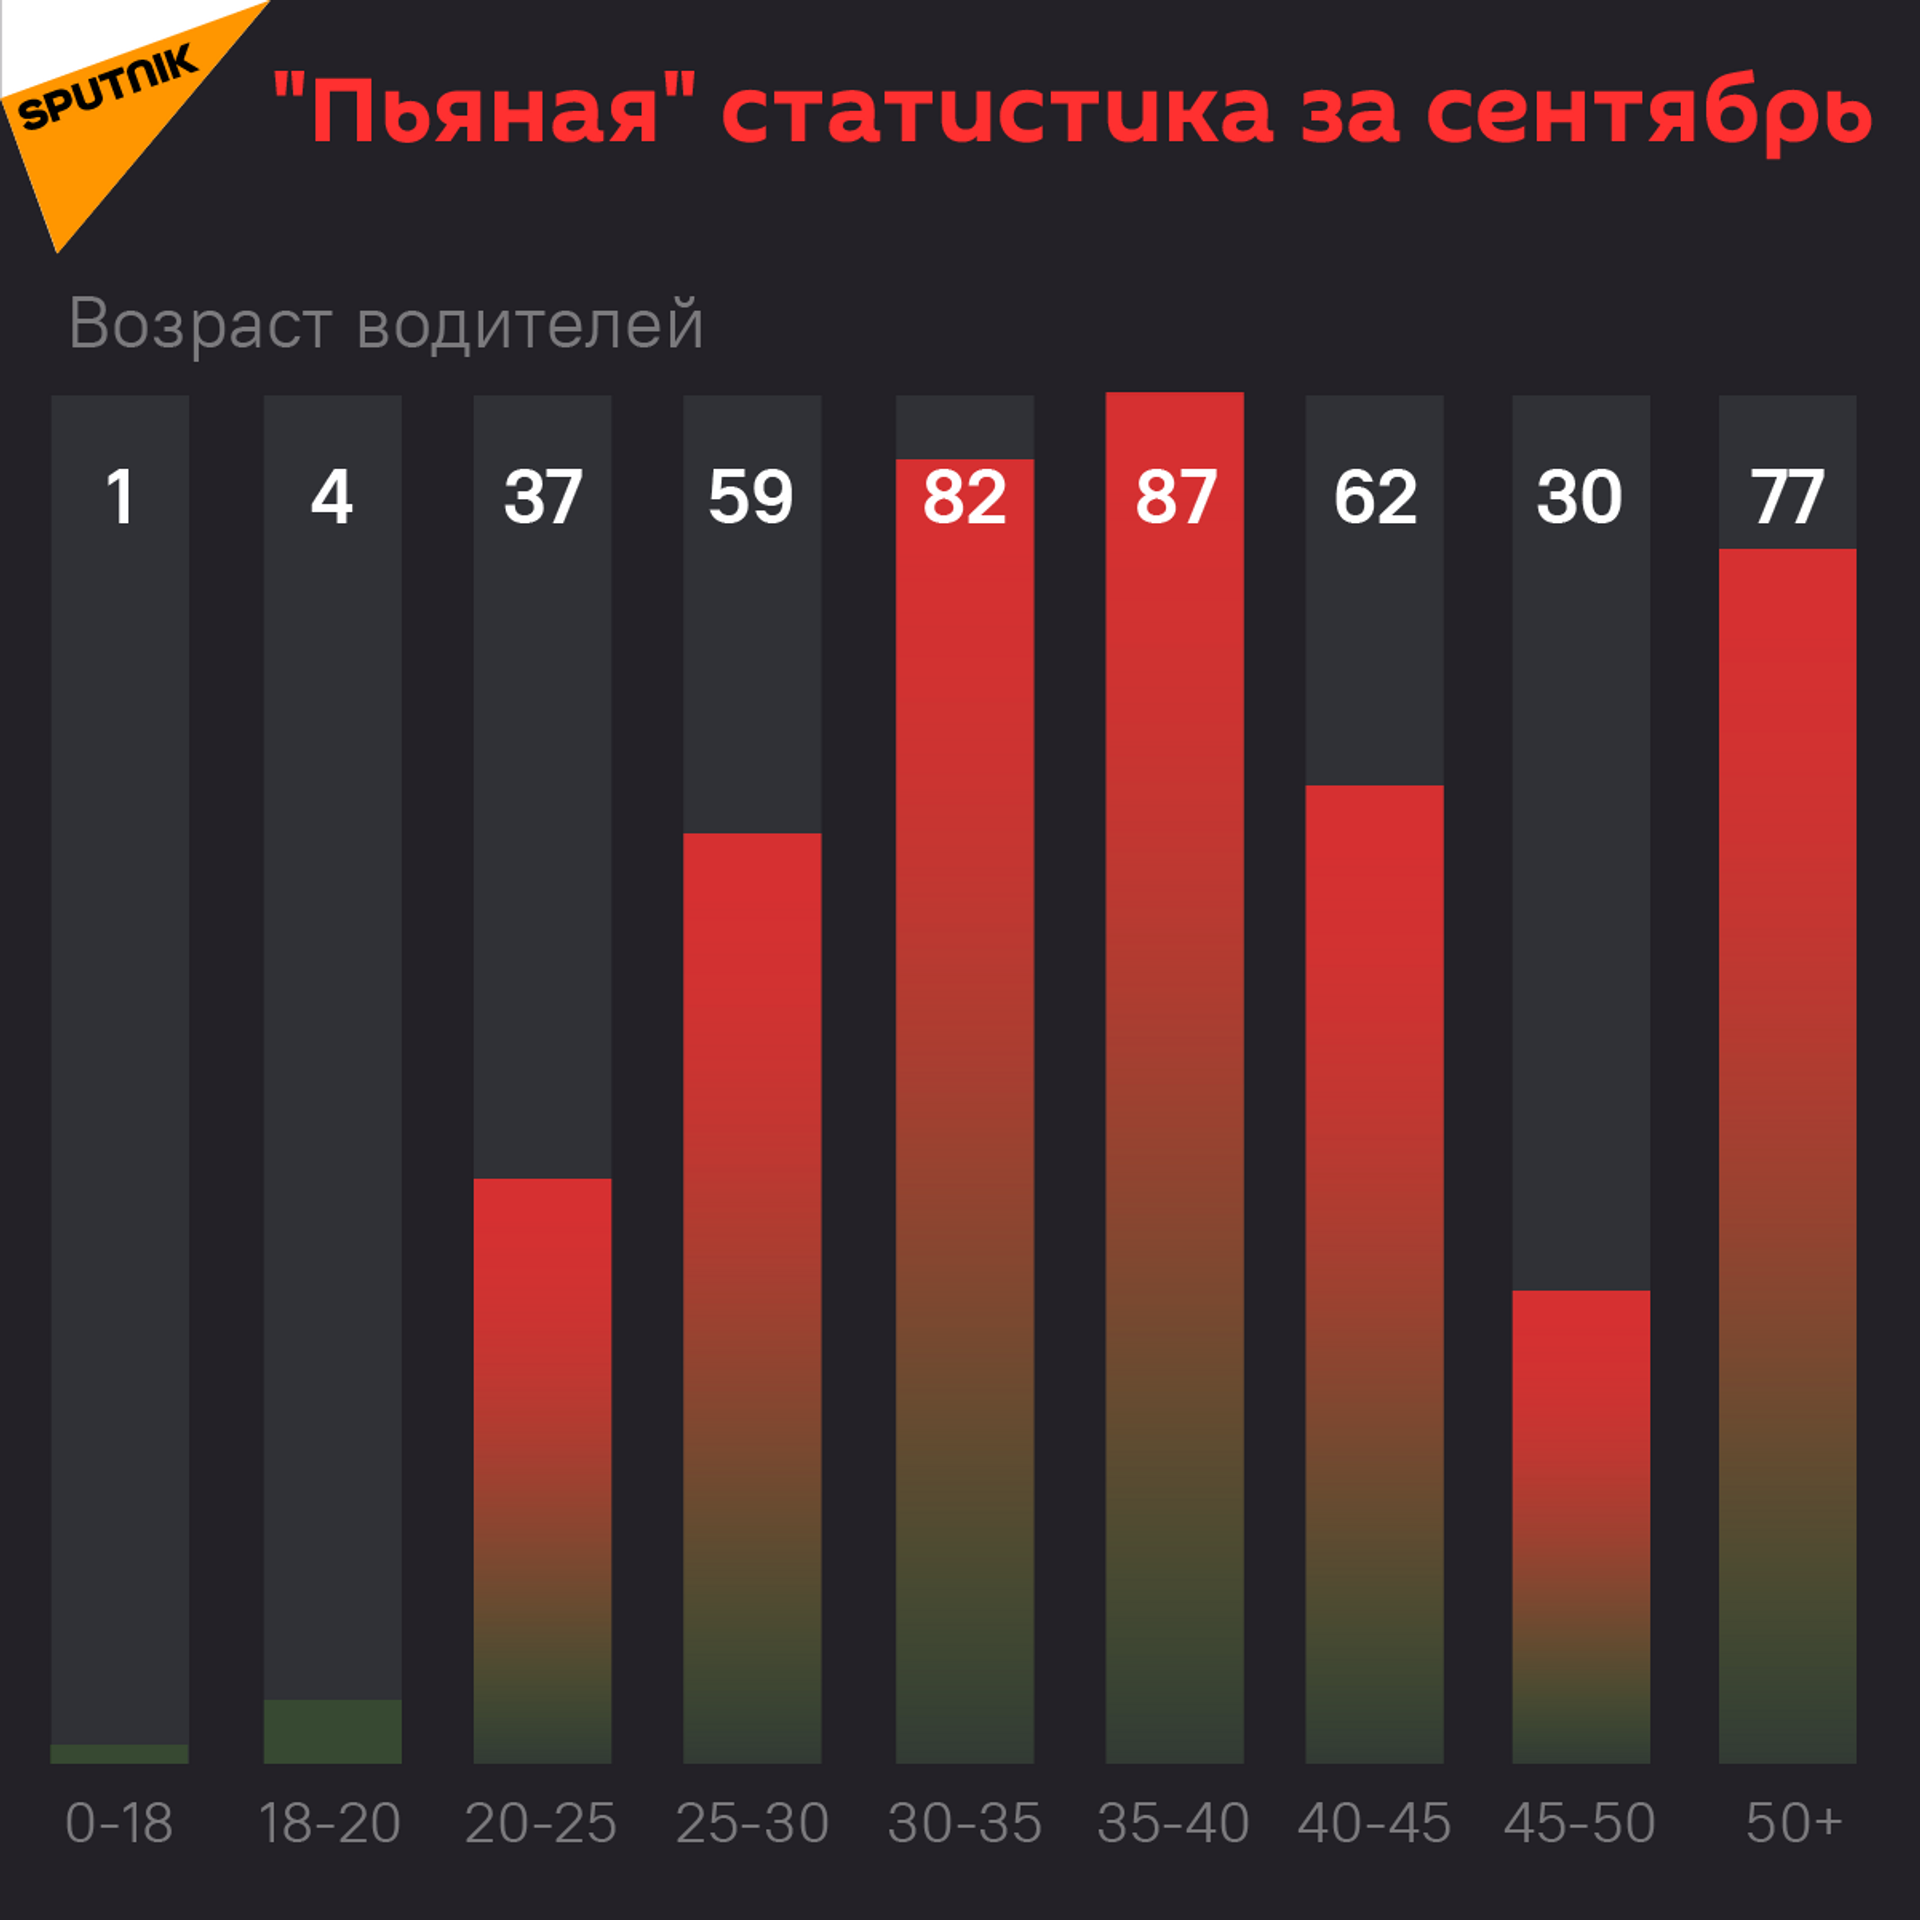 Пьяная статистика за сентябрь  - Sputnik Абхазия, 1920, 12.10.2021